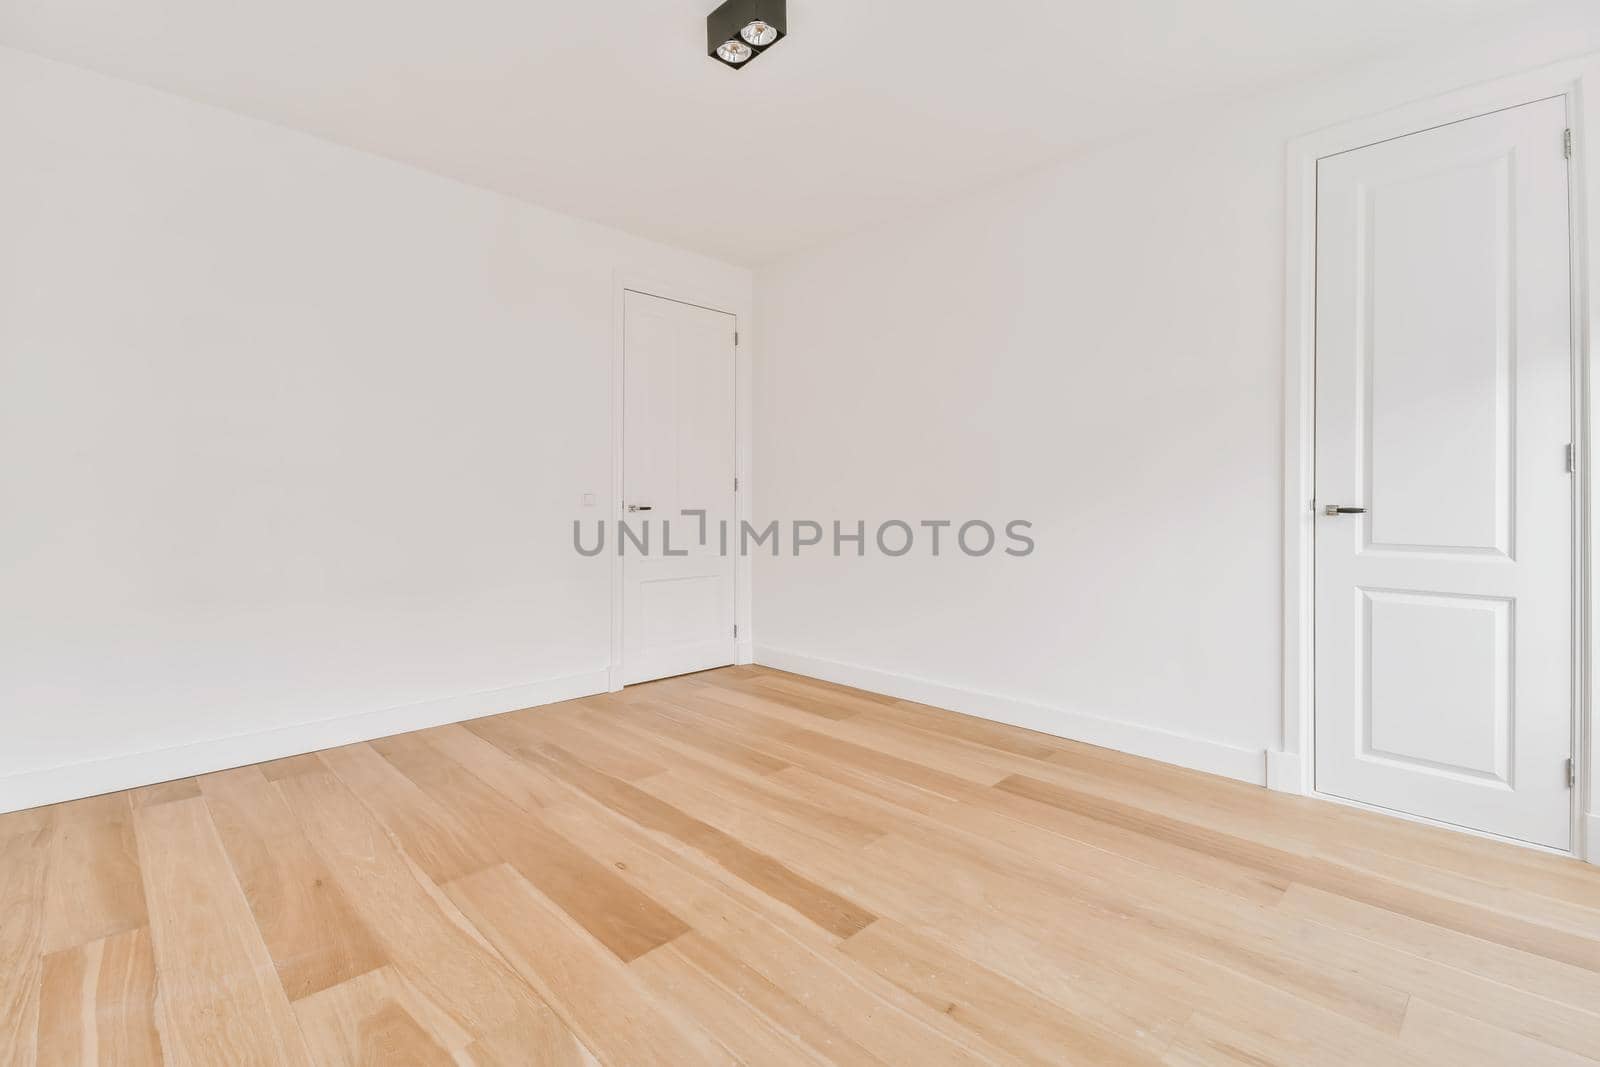 Pretty bright empty room by casamedia